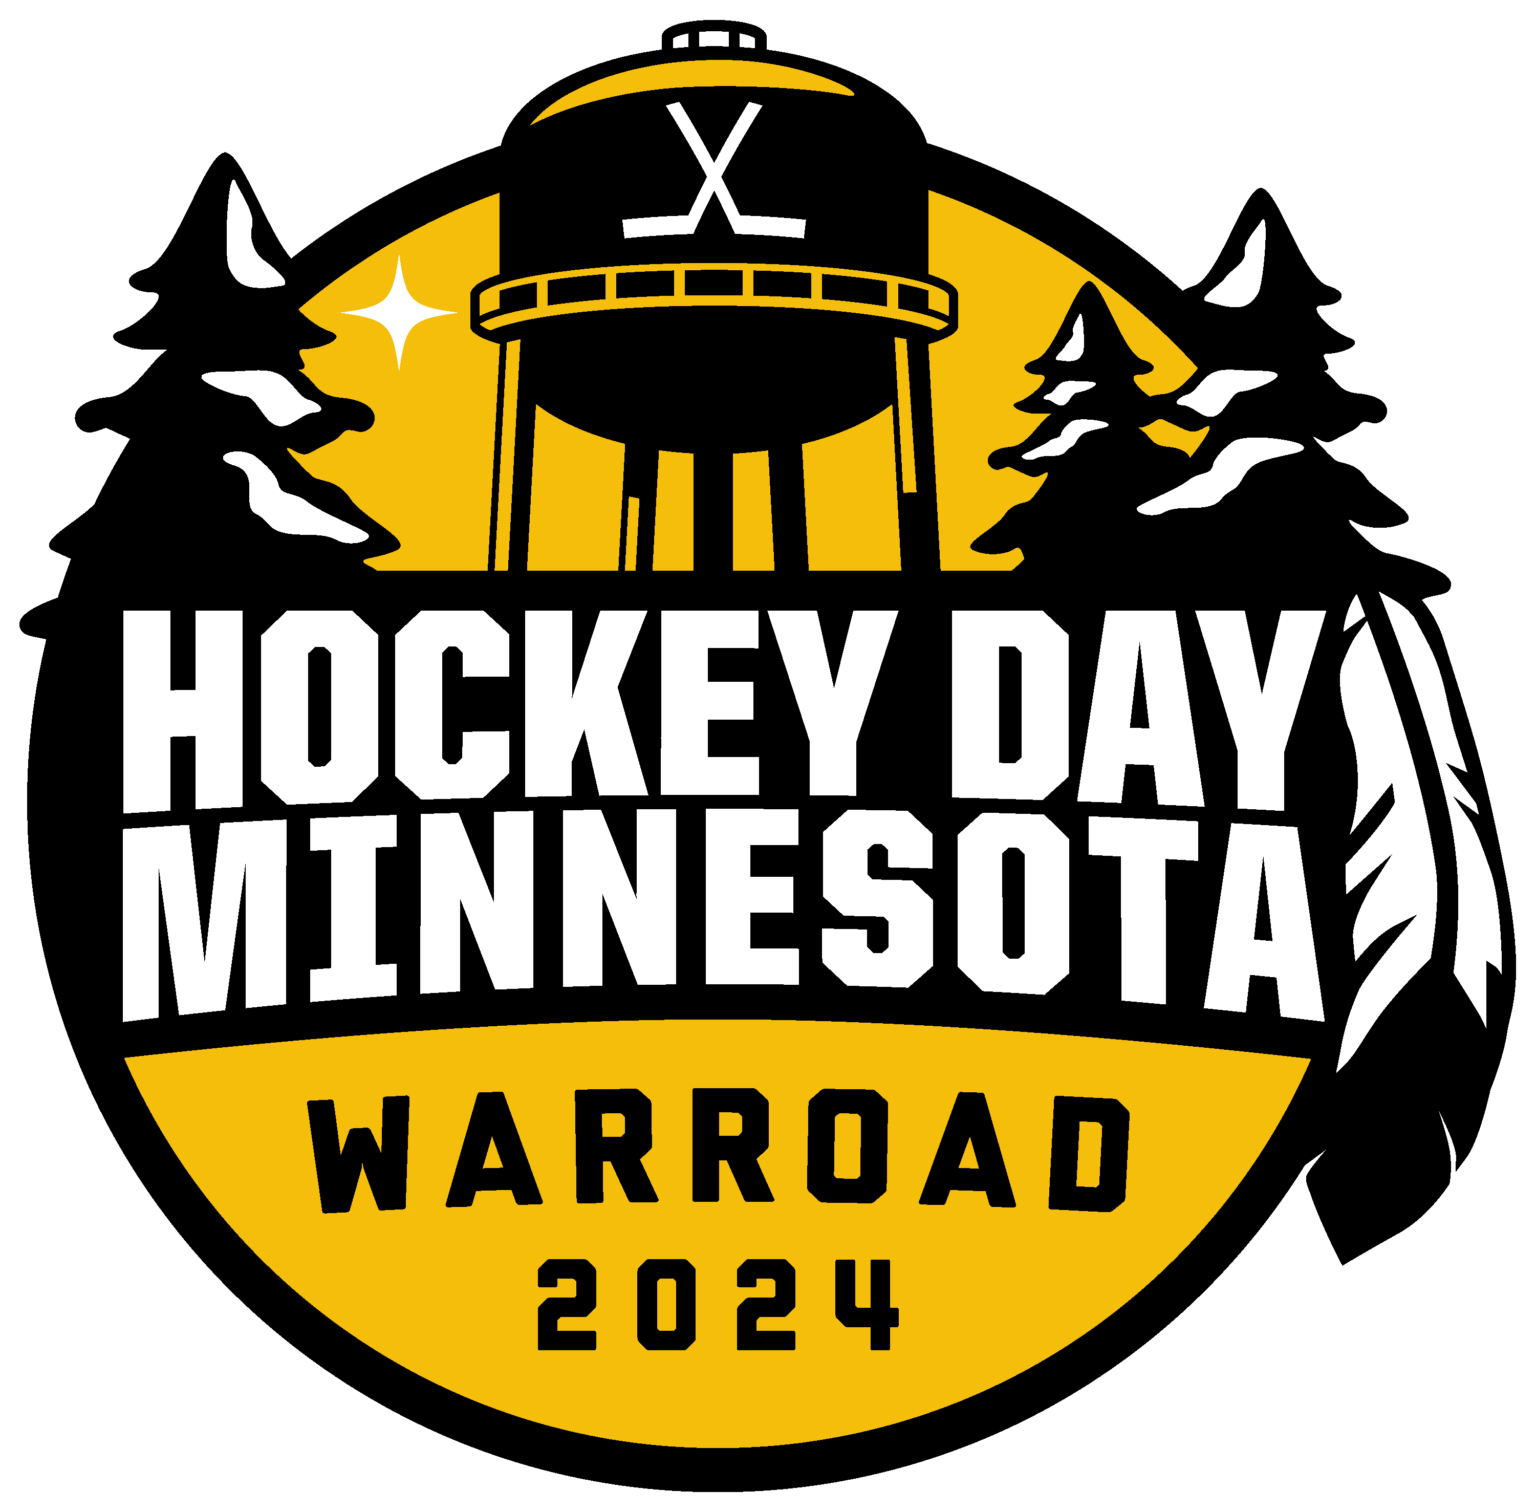 Hockey Day Minnesota 2024 Warroad Threads, Warroad, MN